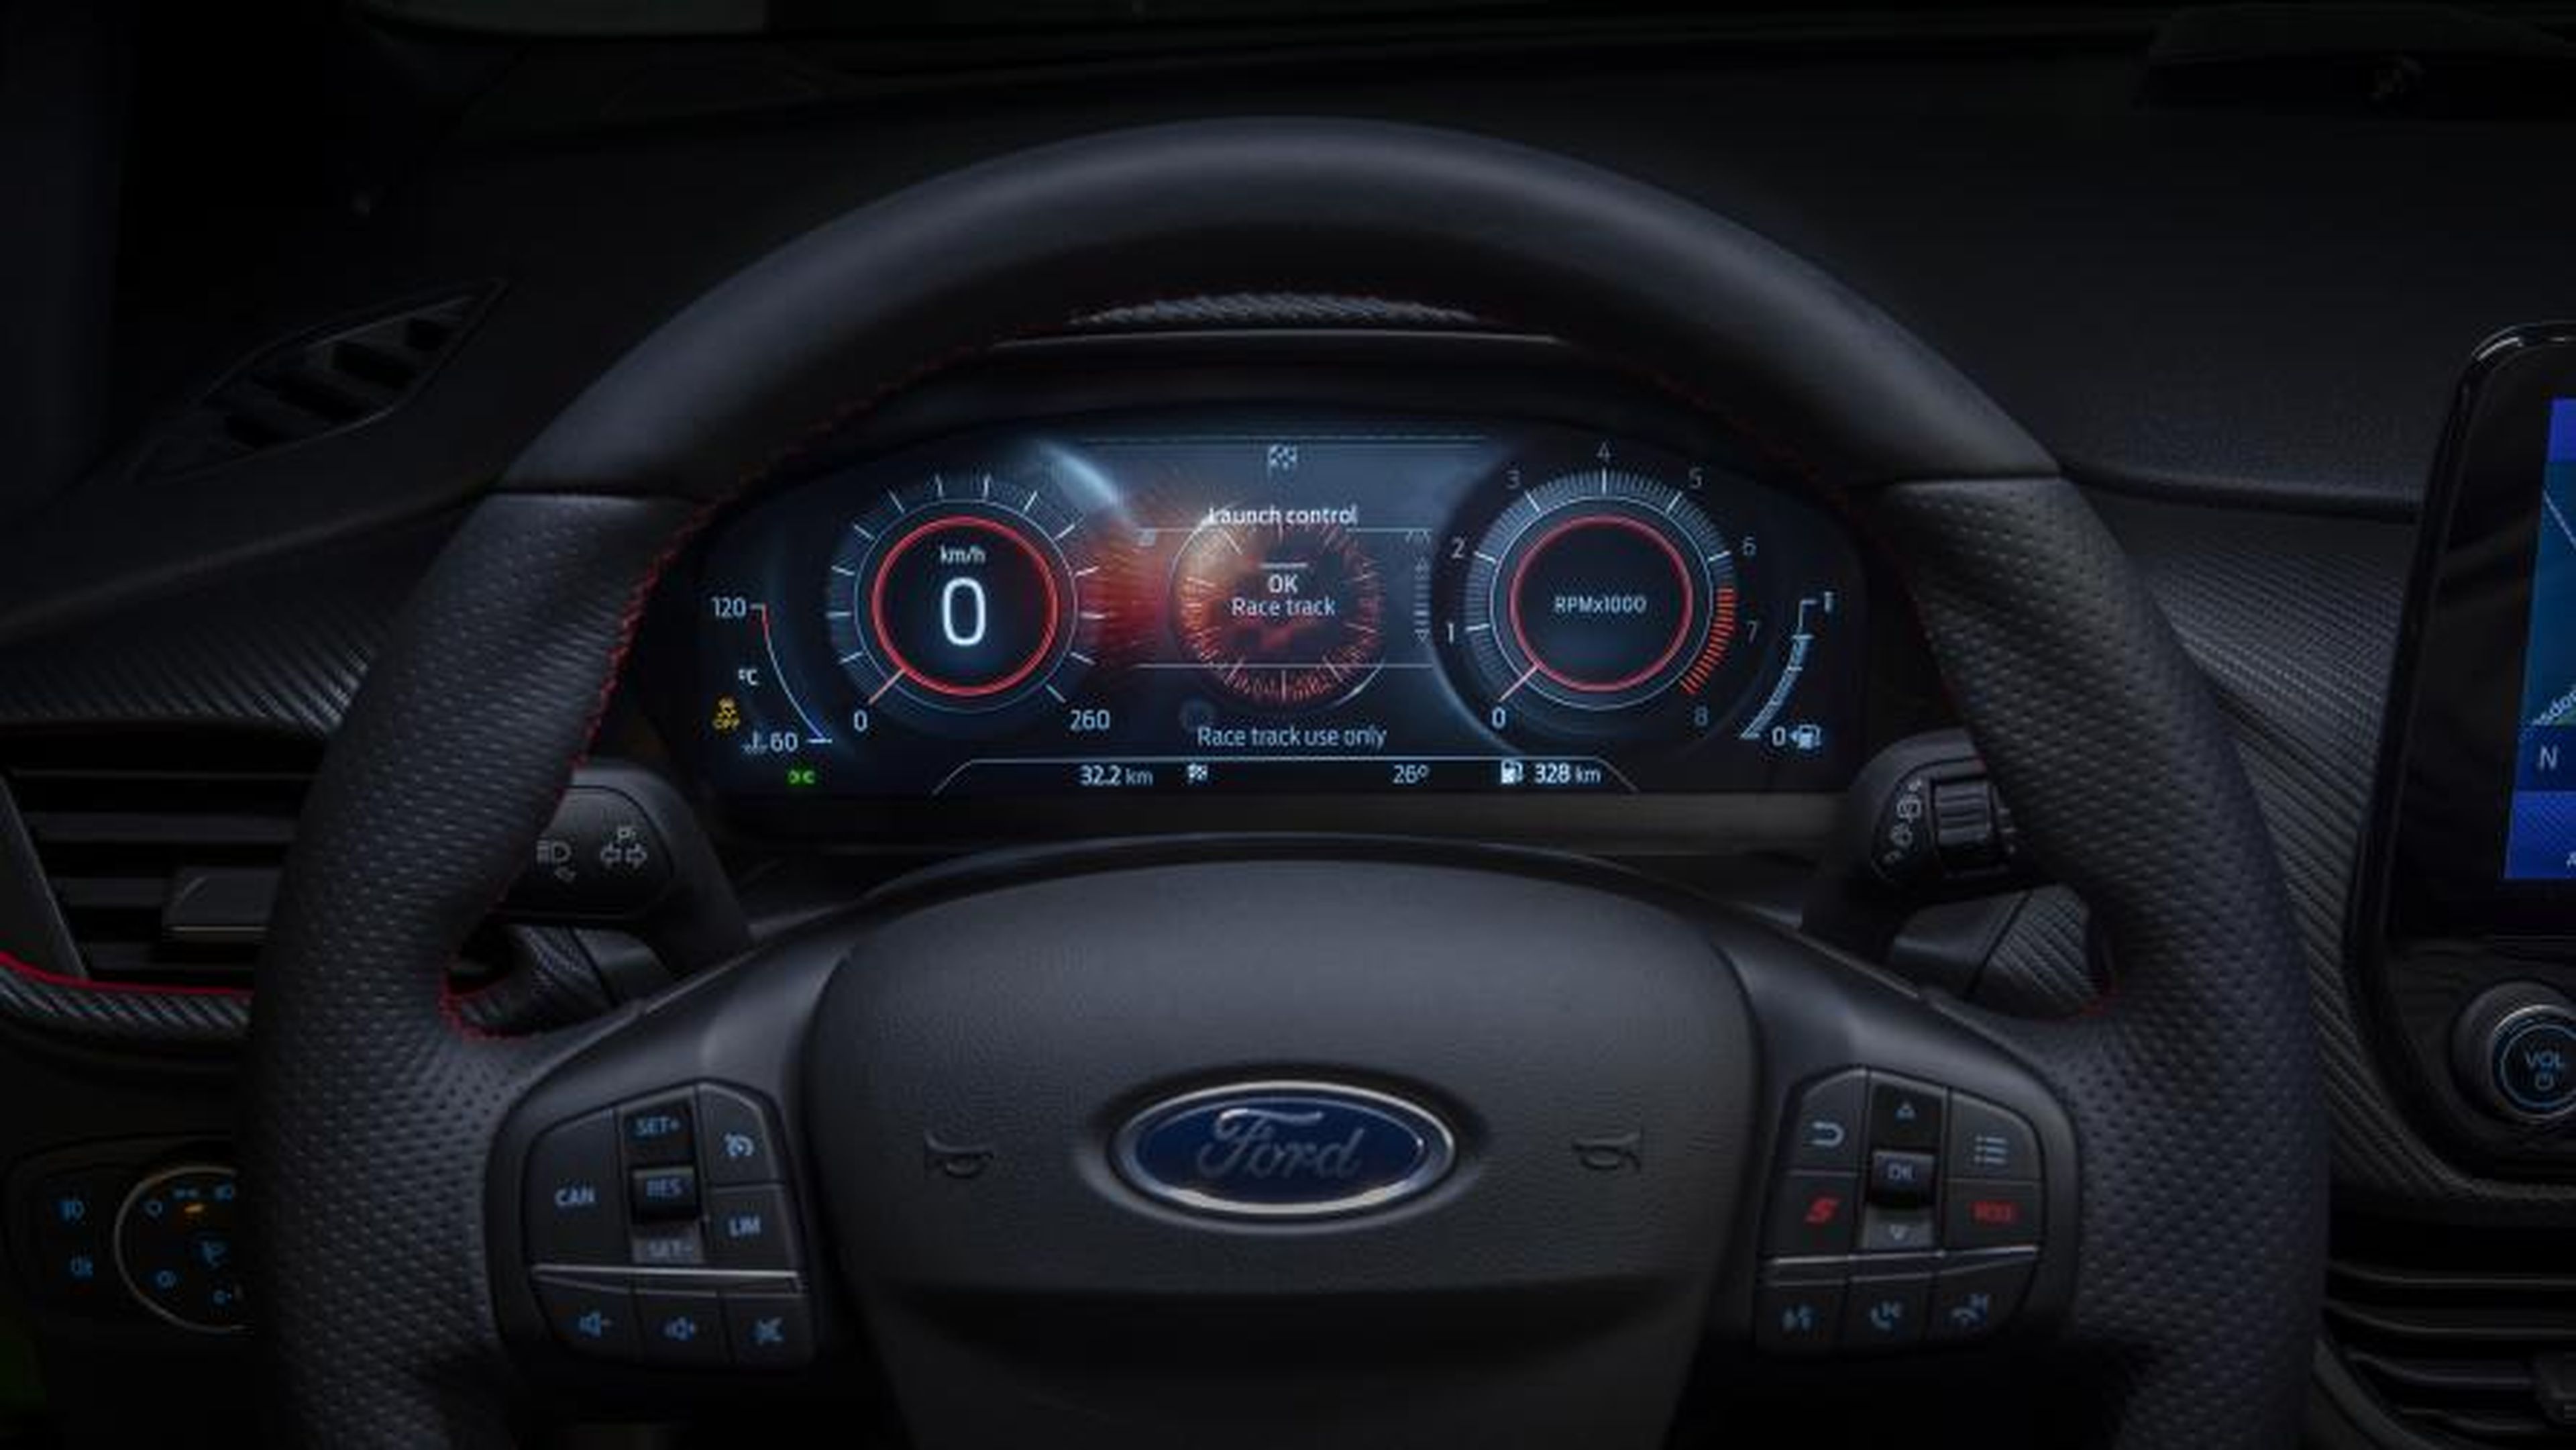 Cuadro de relojes digital del Ford Fiesta 2021